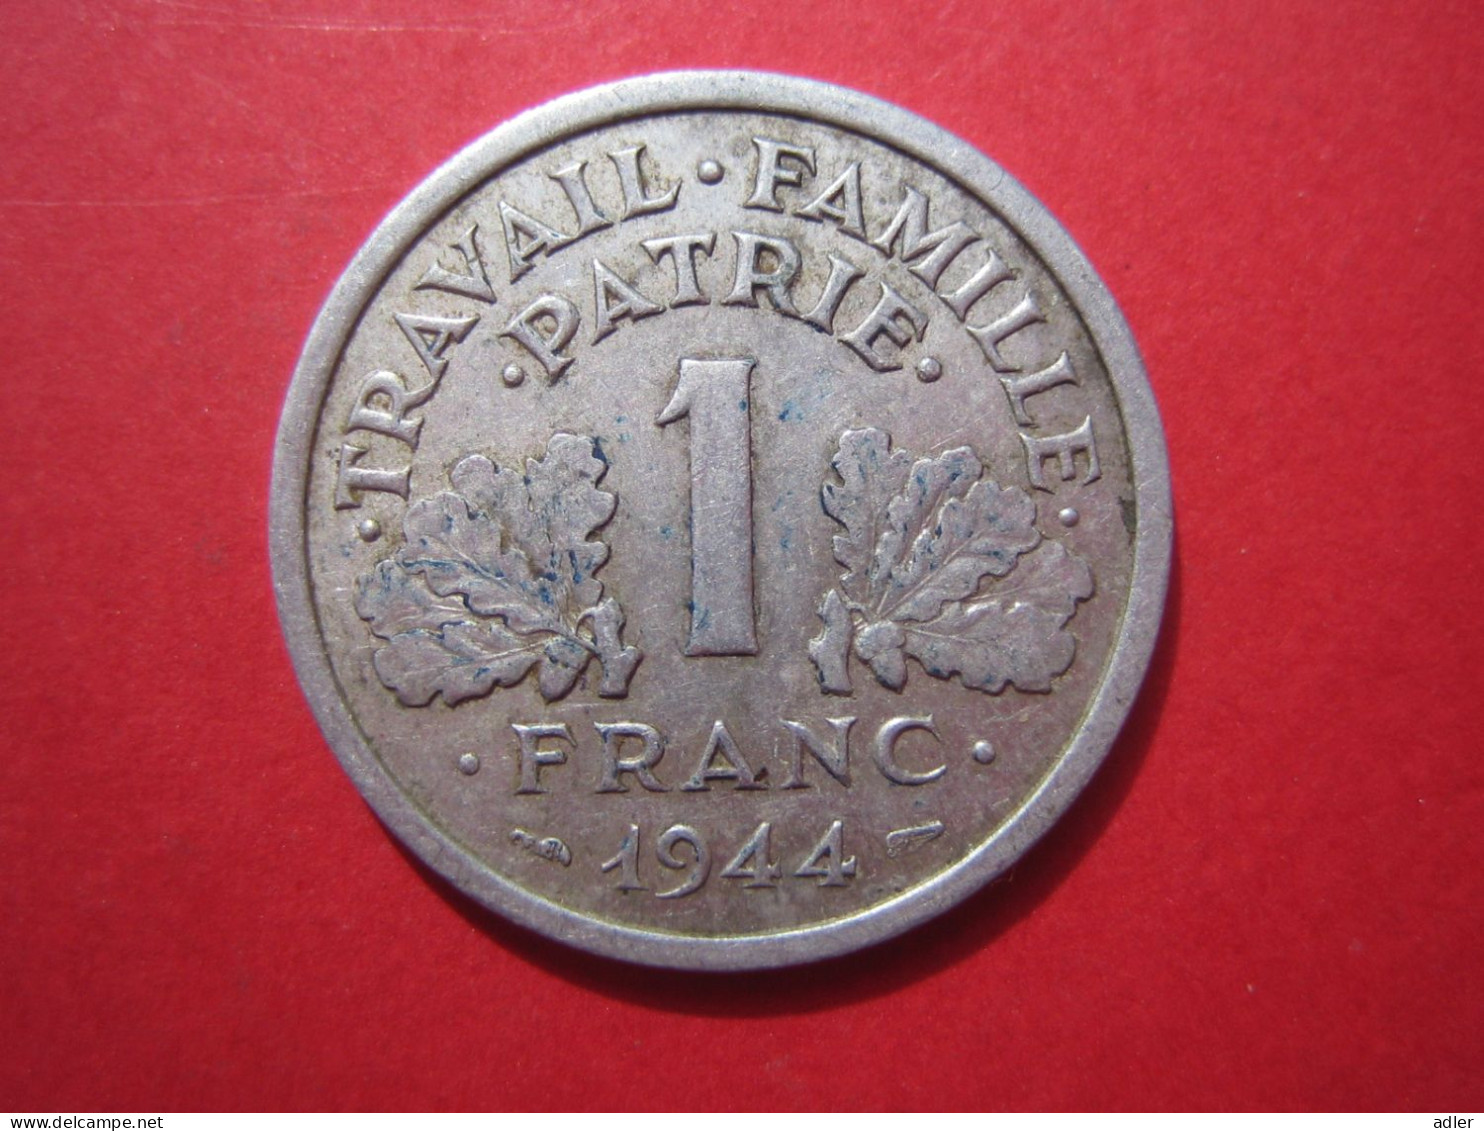 *** ETAT FRANCAIS 1 FRANC 1944 C *** - 1 Franc